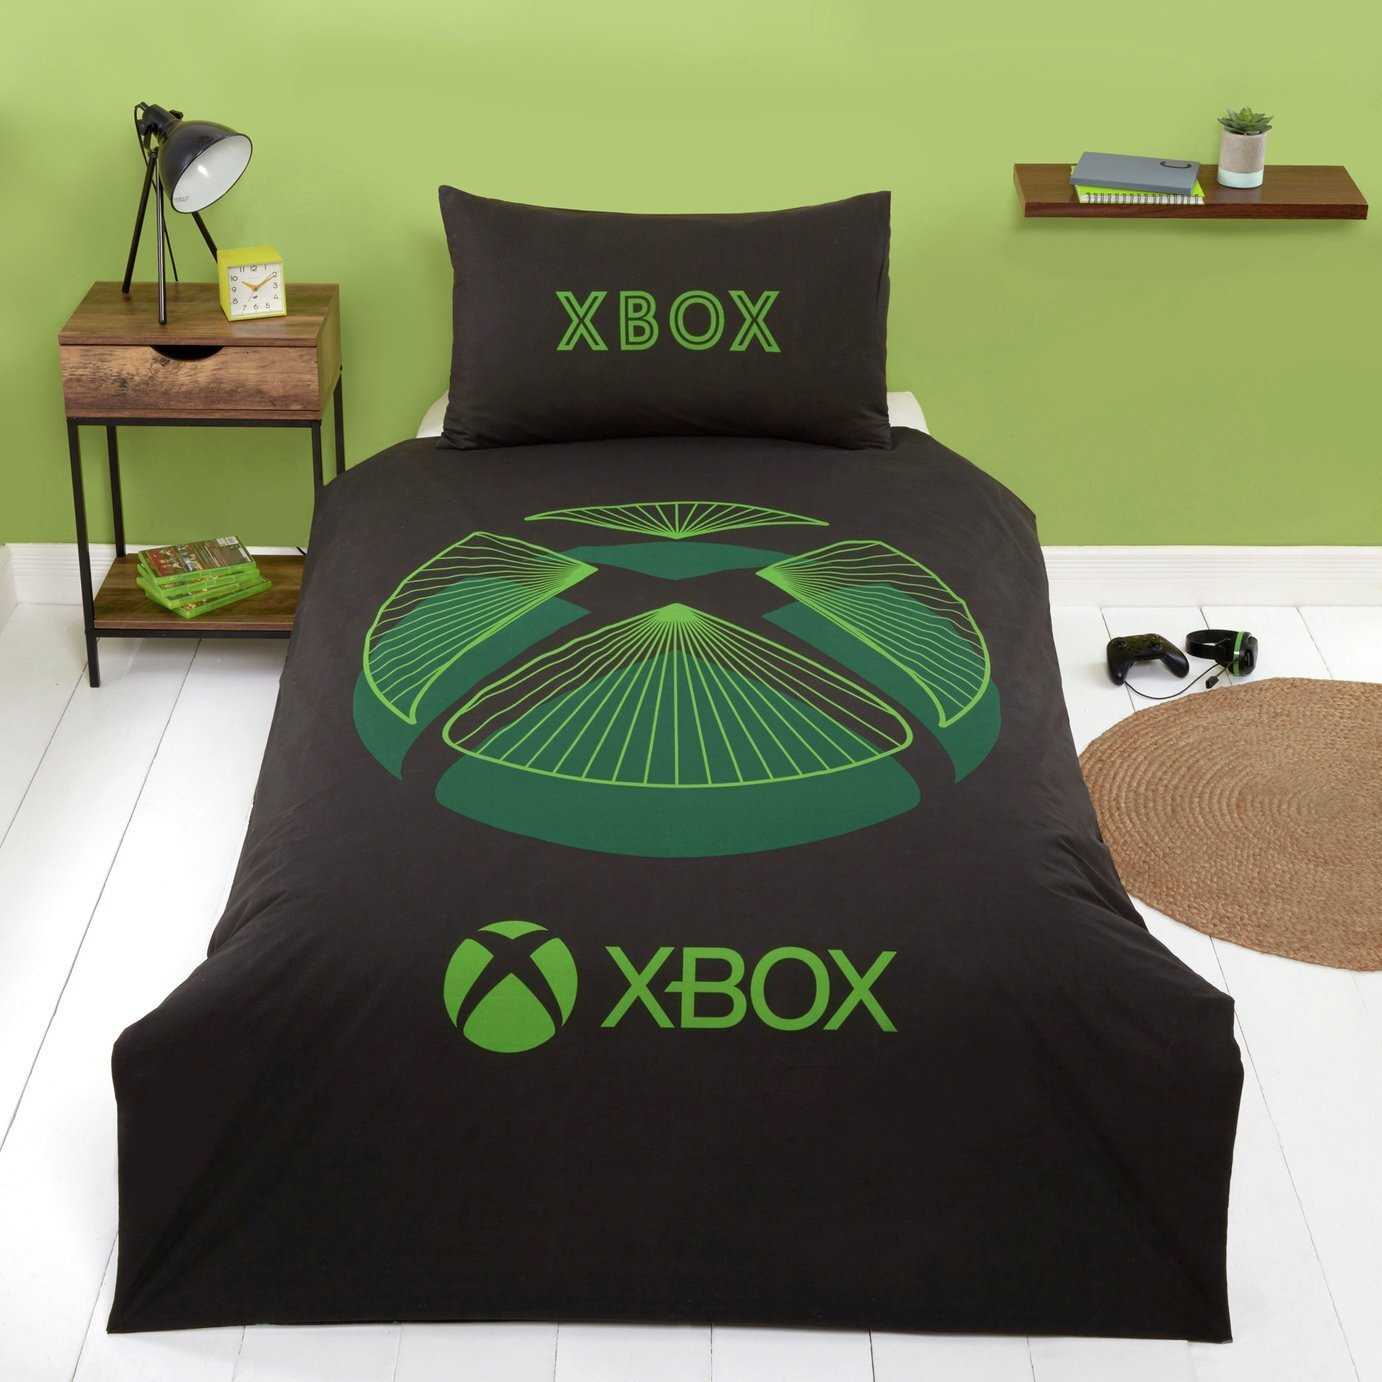 Xbox New Black Kids Bedding Set - Single - image 1